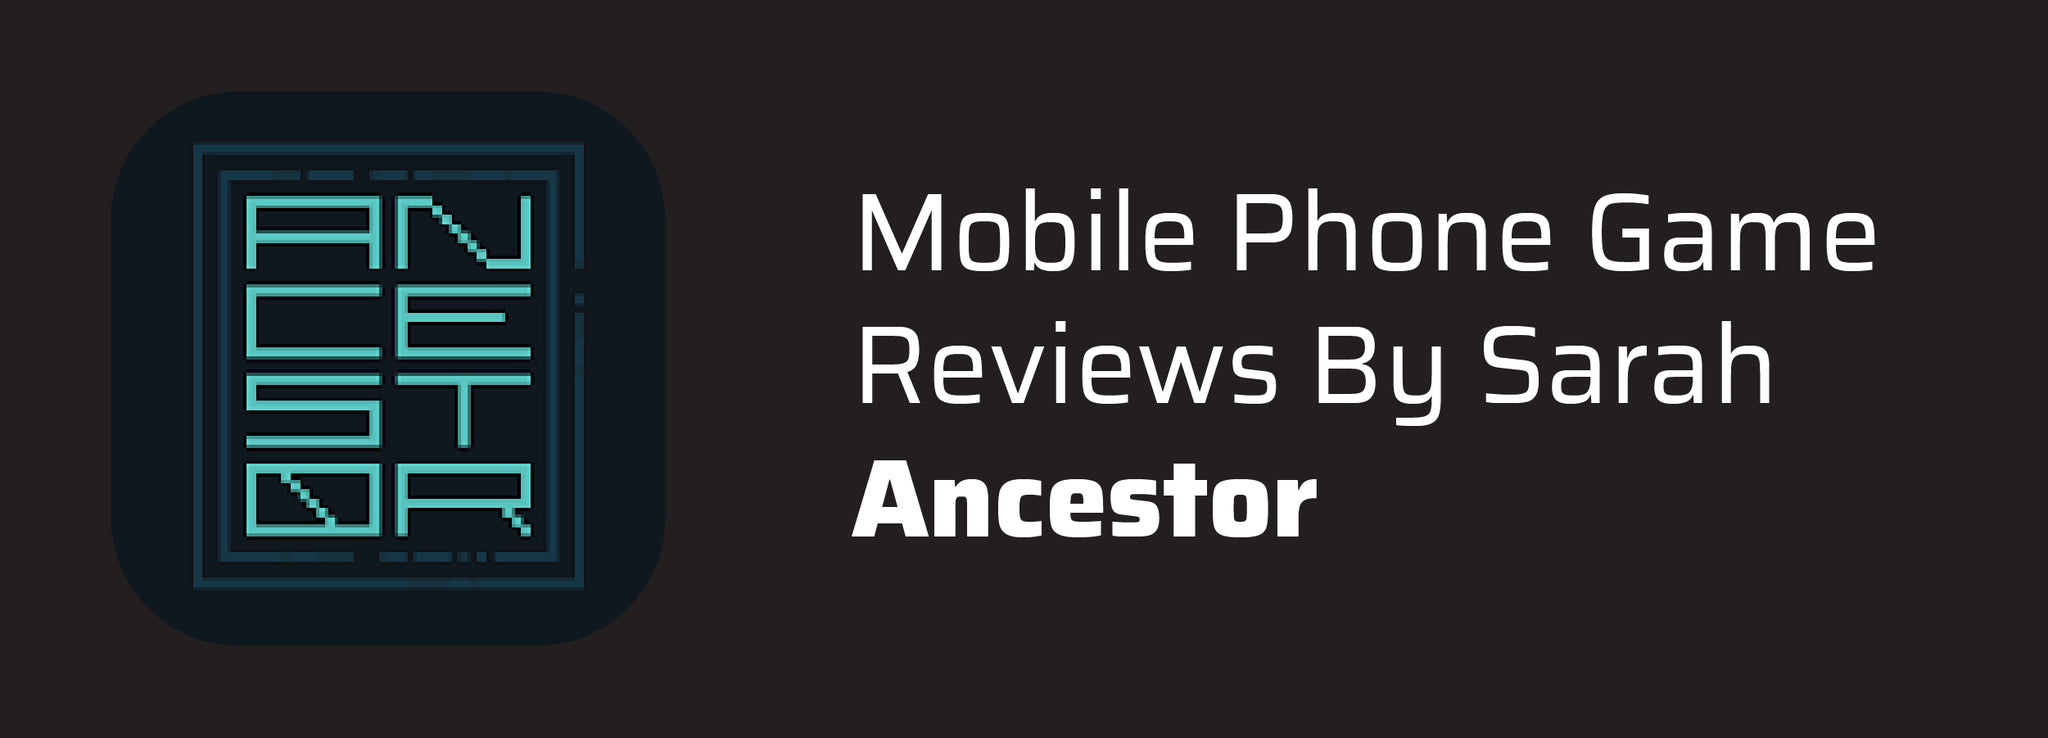 Mobile Phone Game Reviews By Sarah: Ancestor